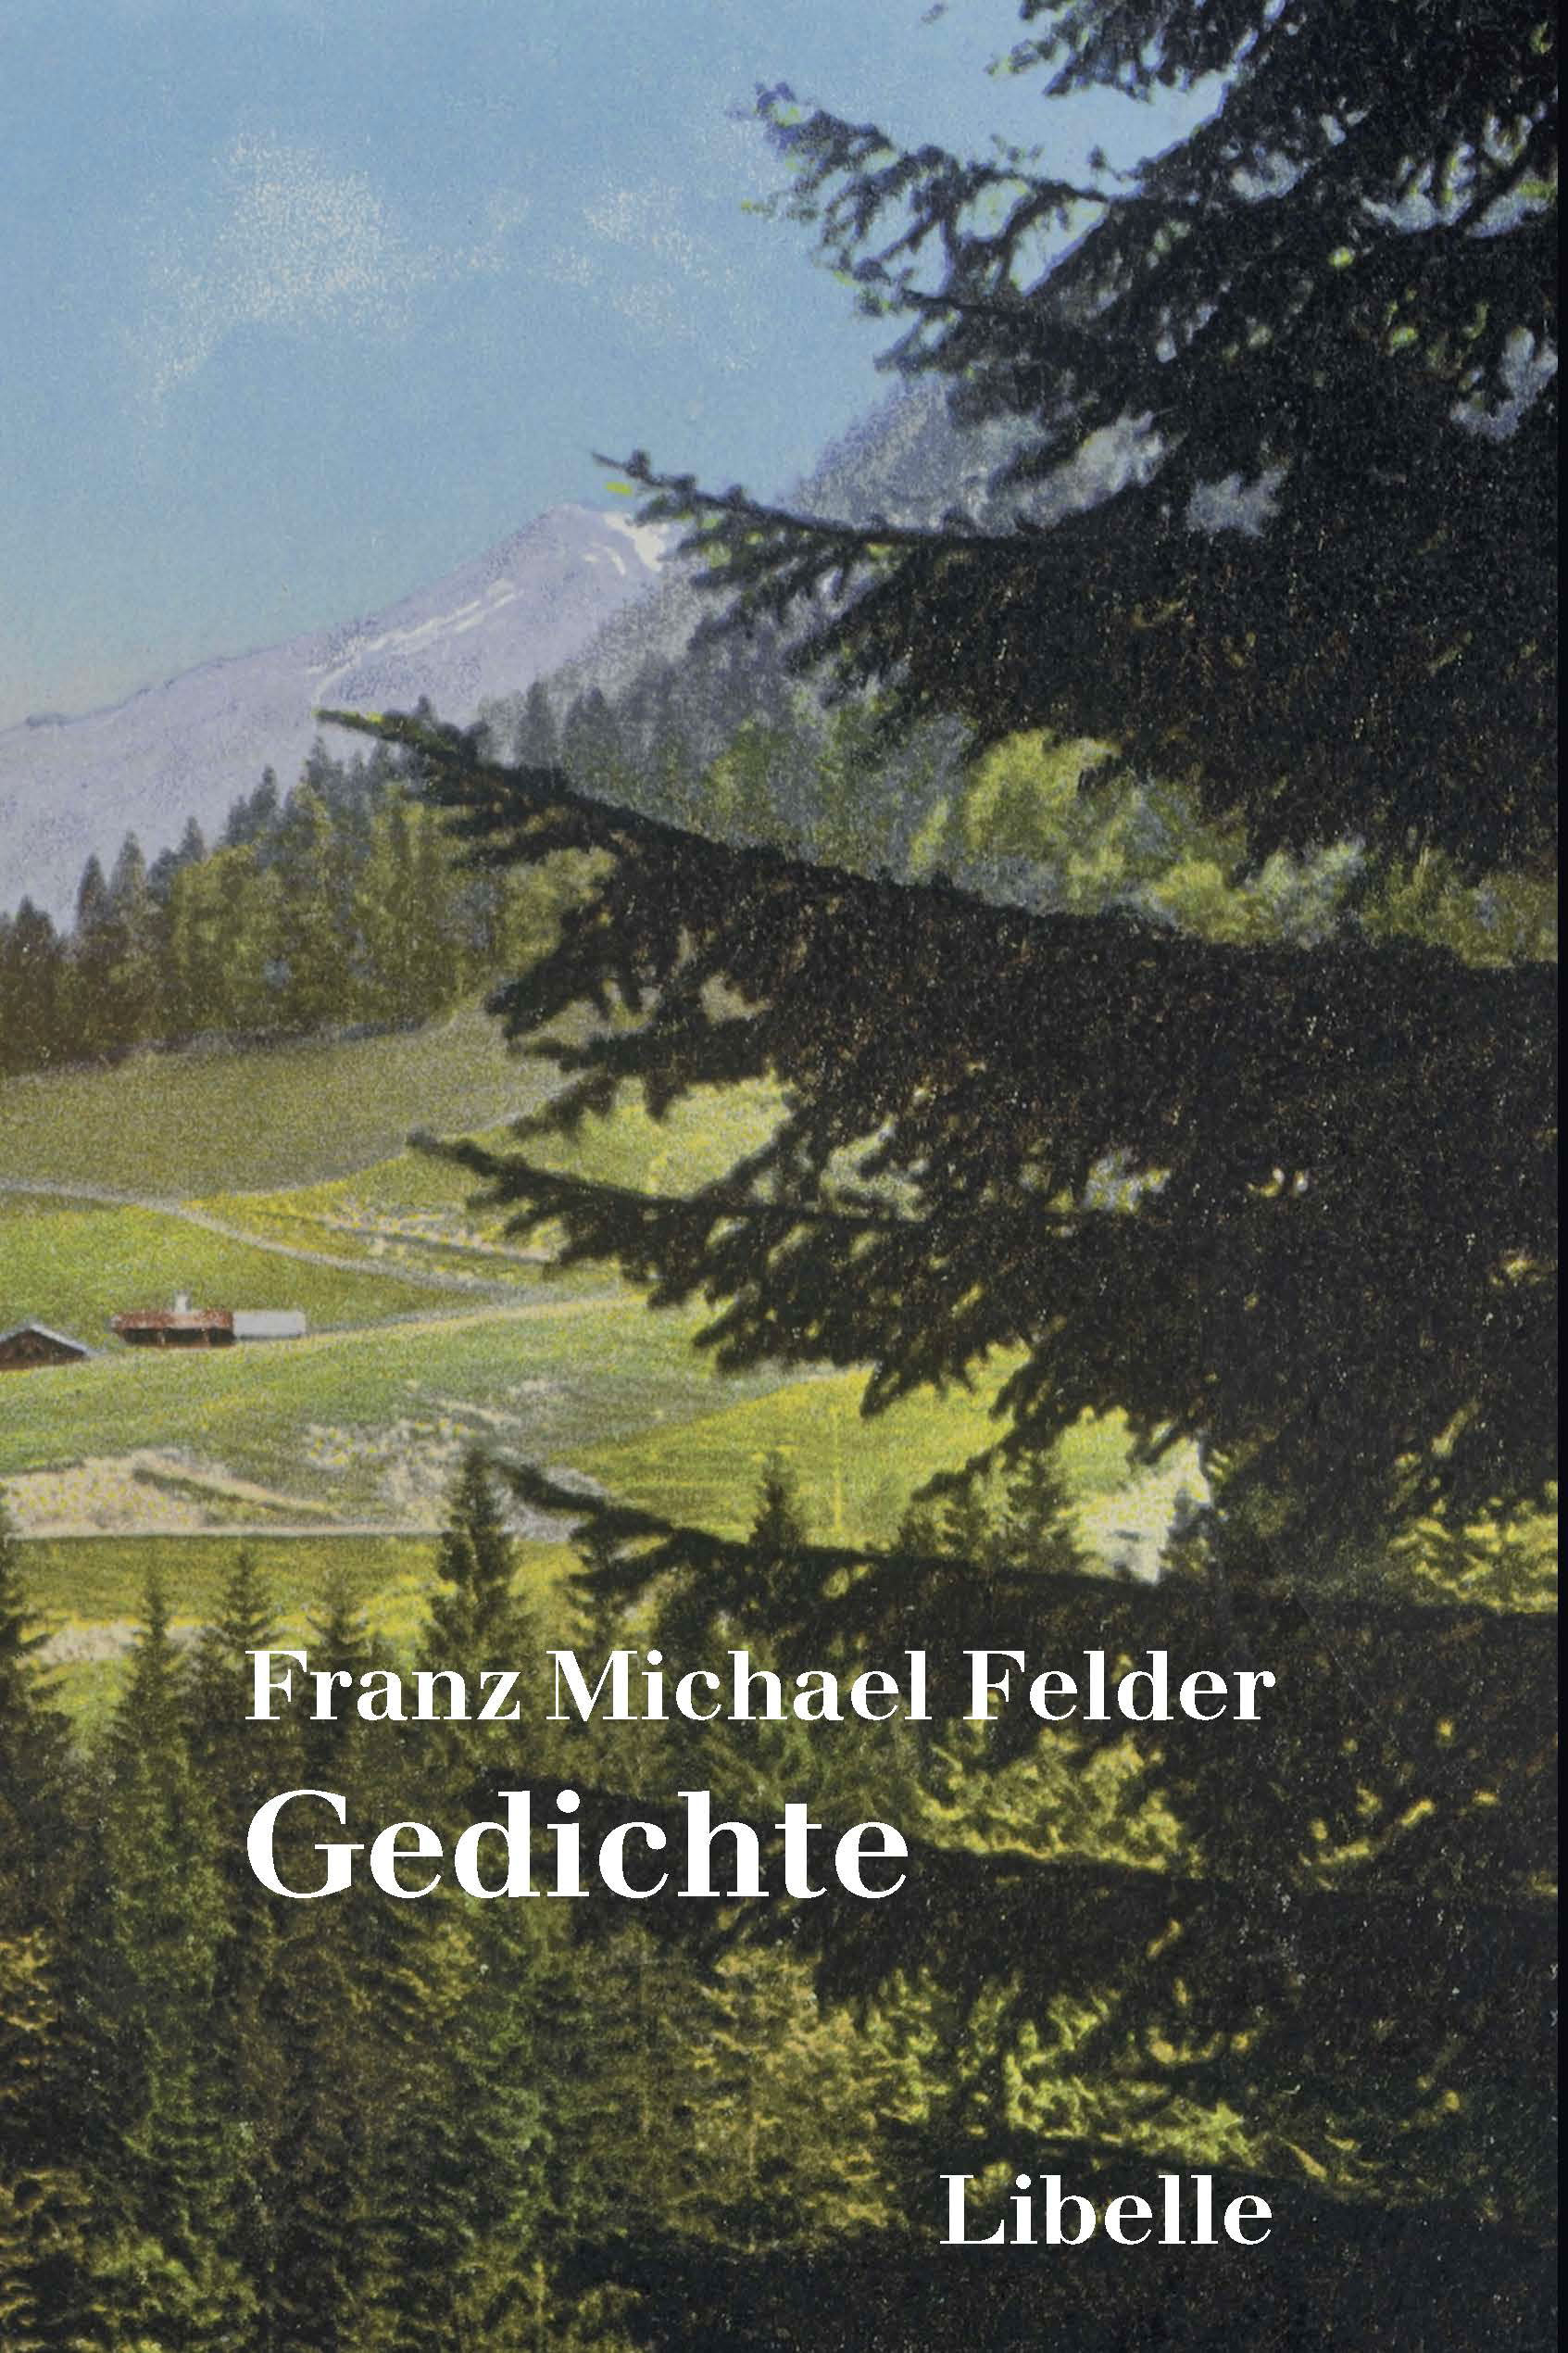 Franz Michael Felder, Gedichte